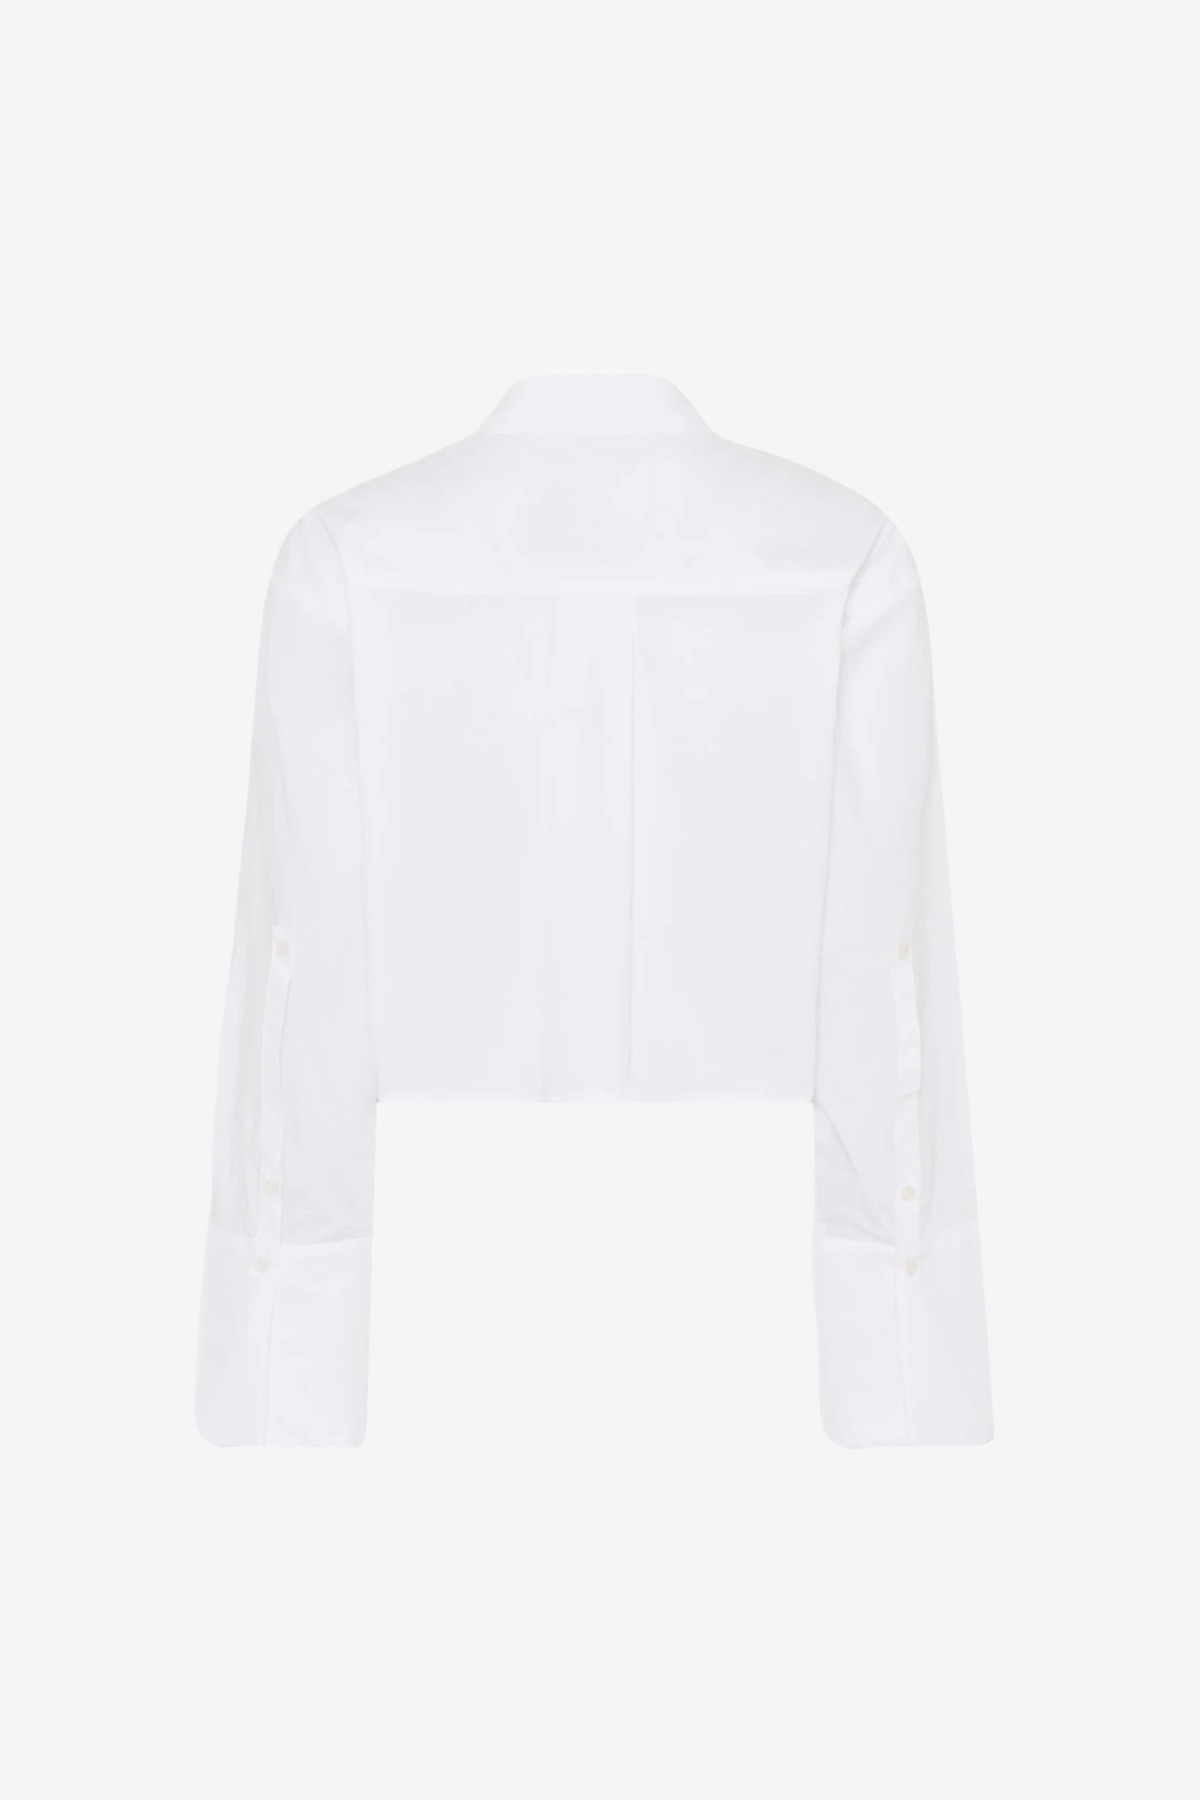 Herskind Samuel Shirt in White